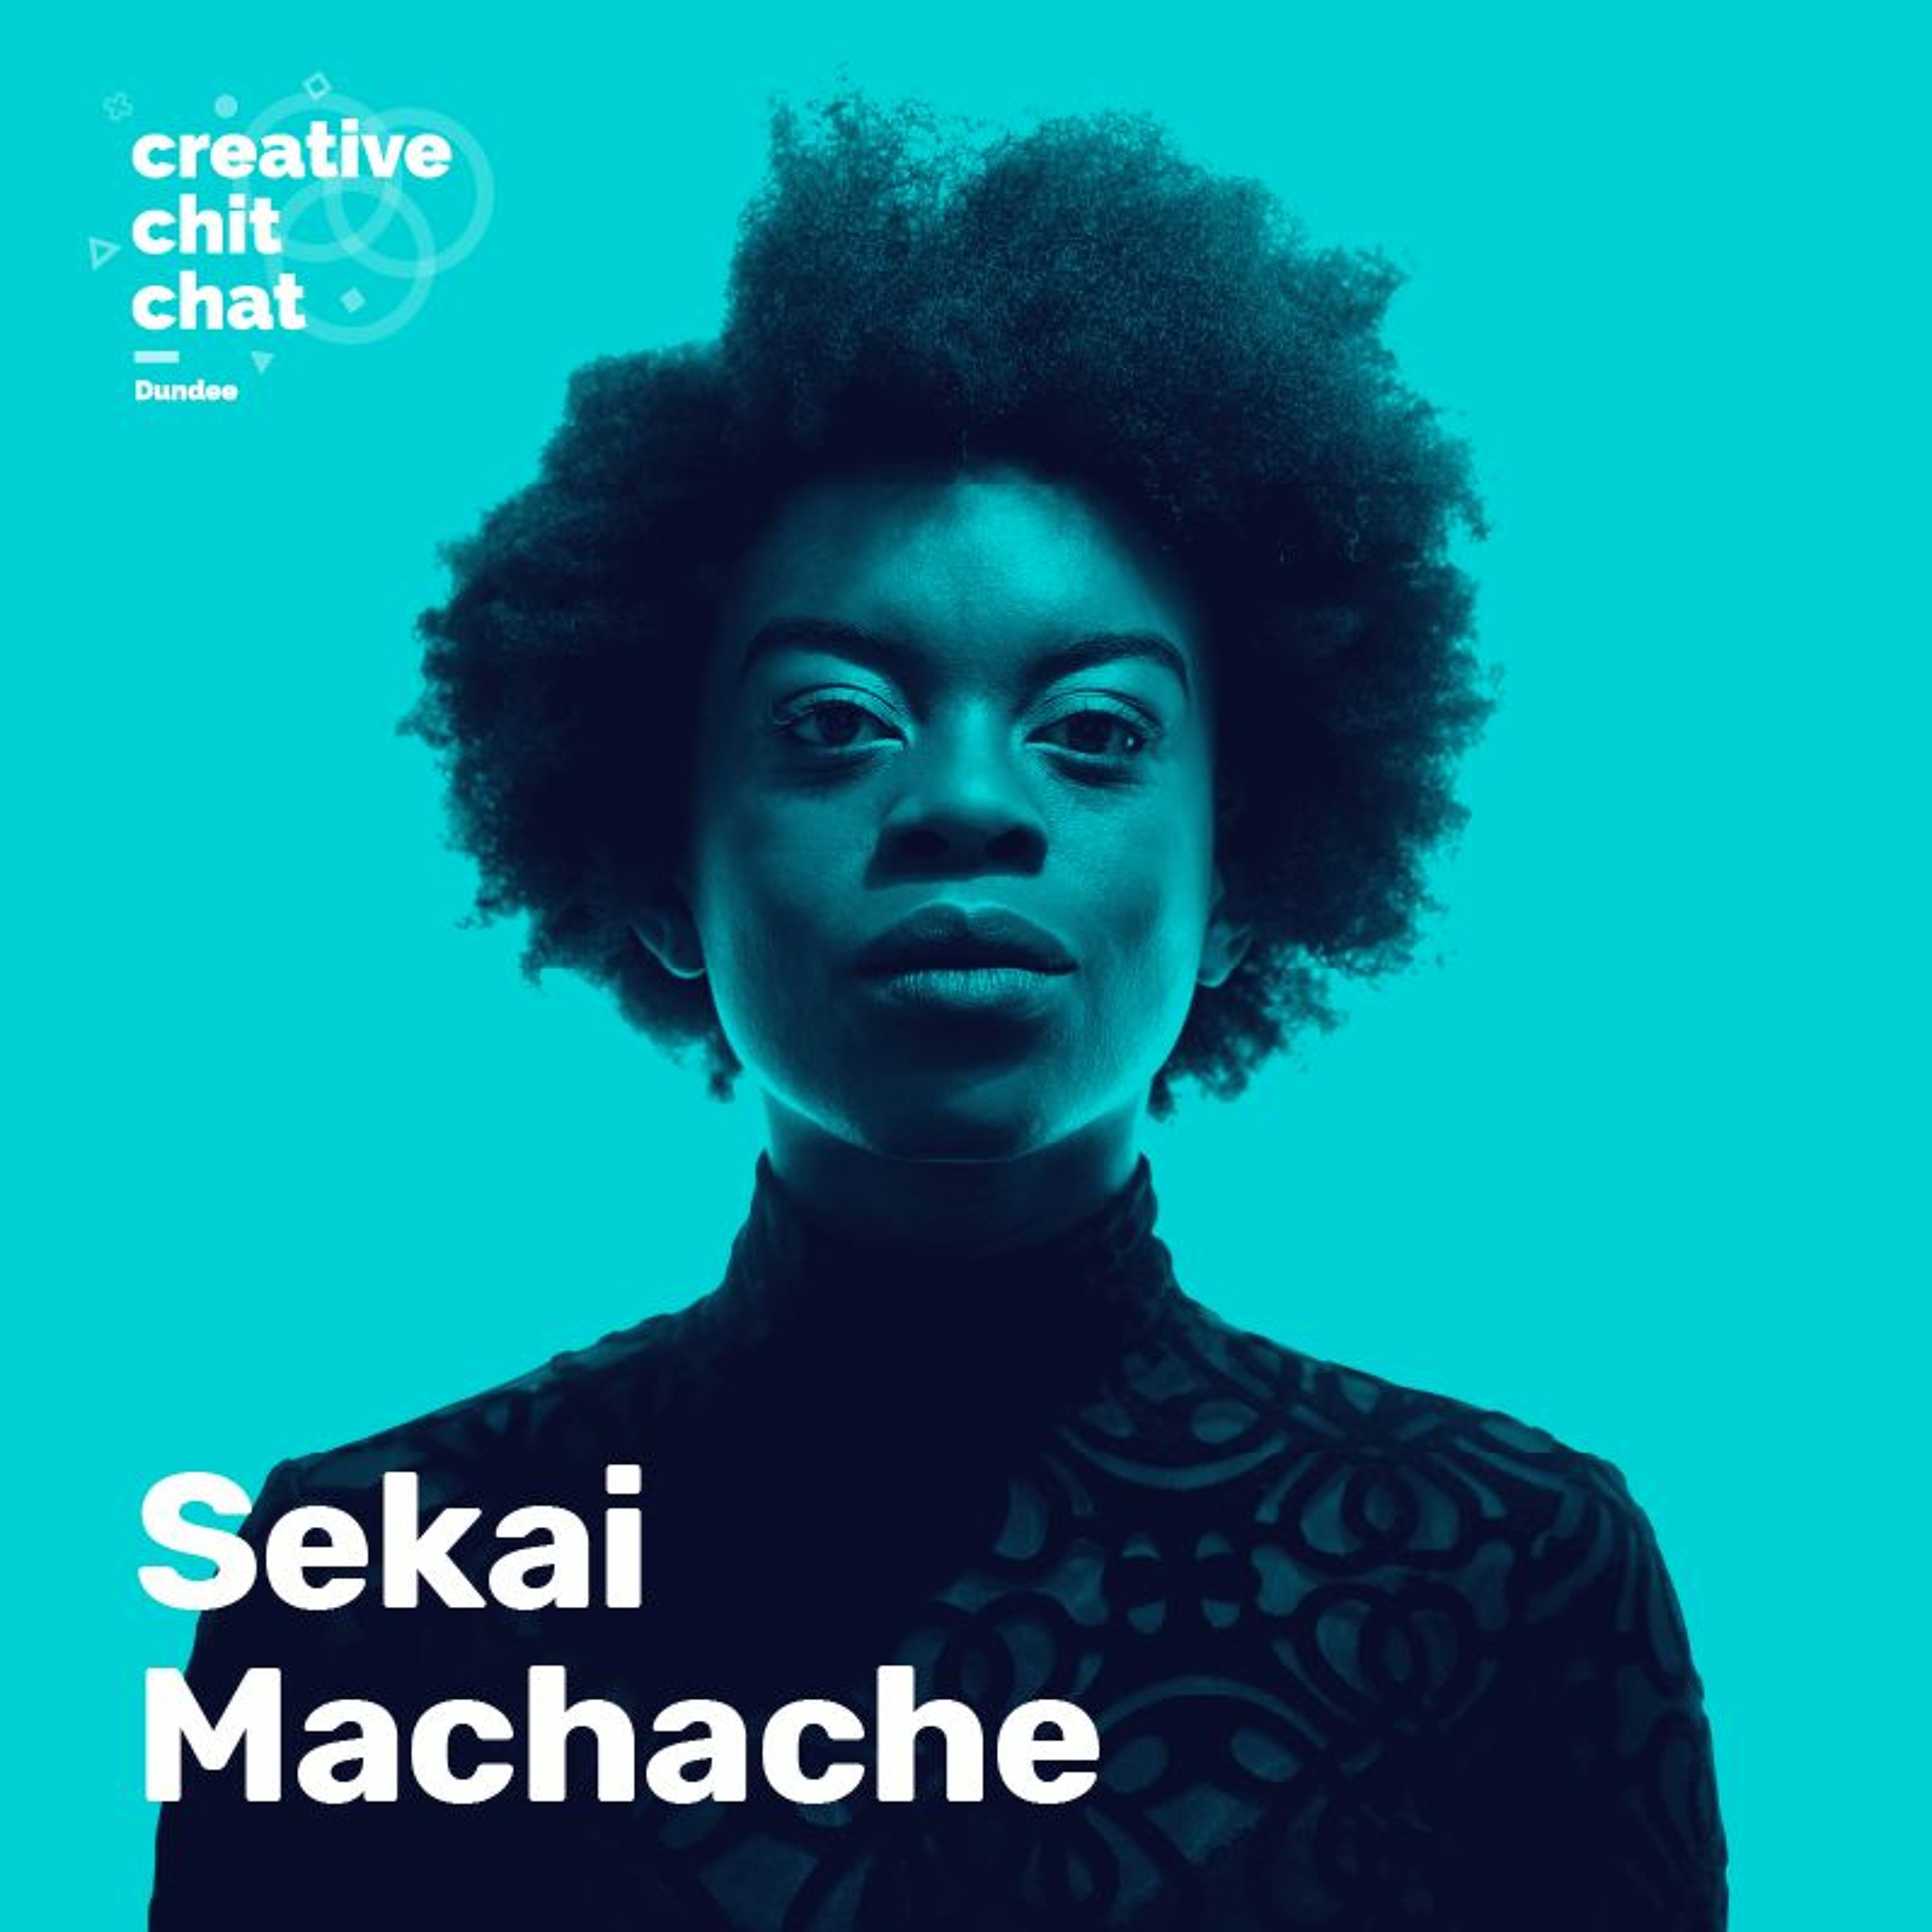 Sekai Machache - Art, underrepresentation and true collaboration